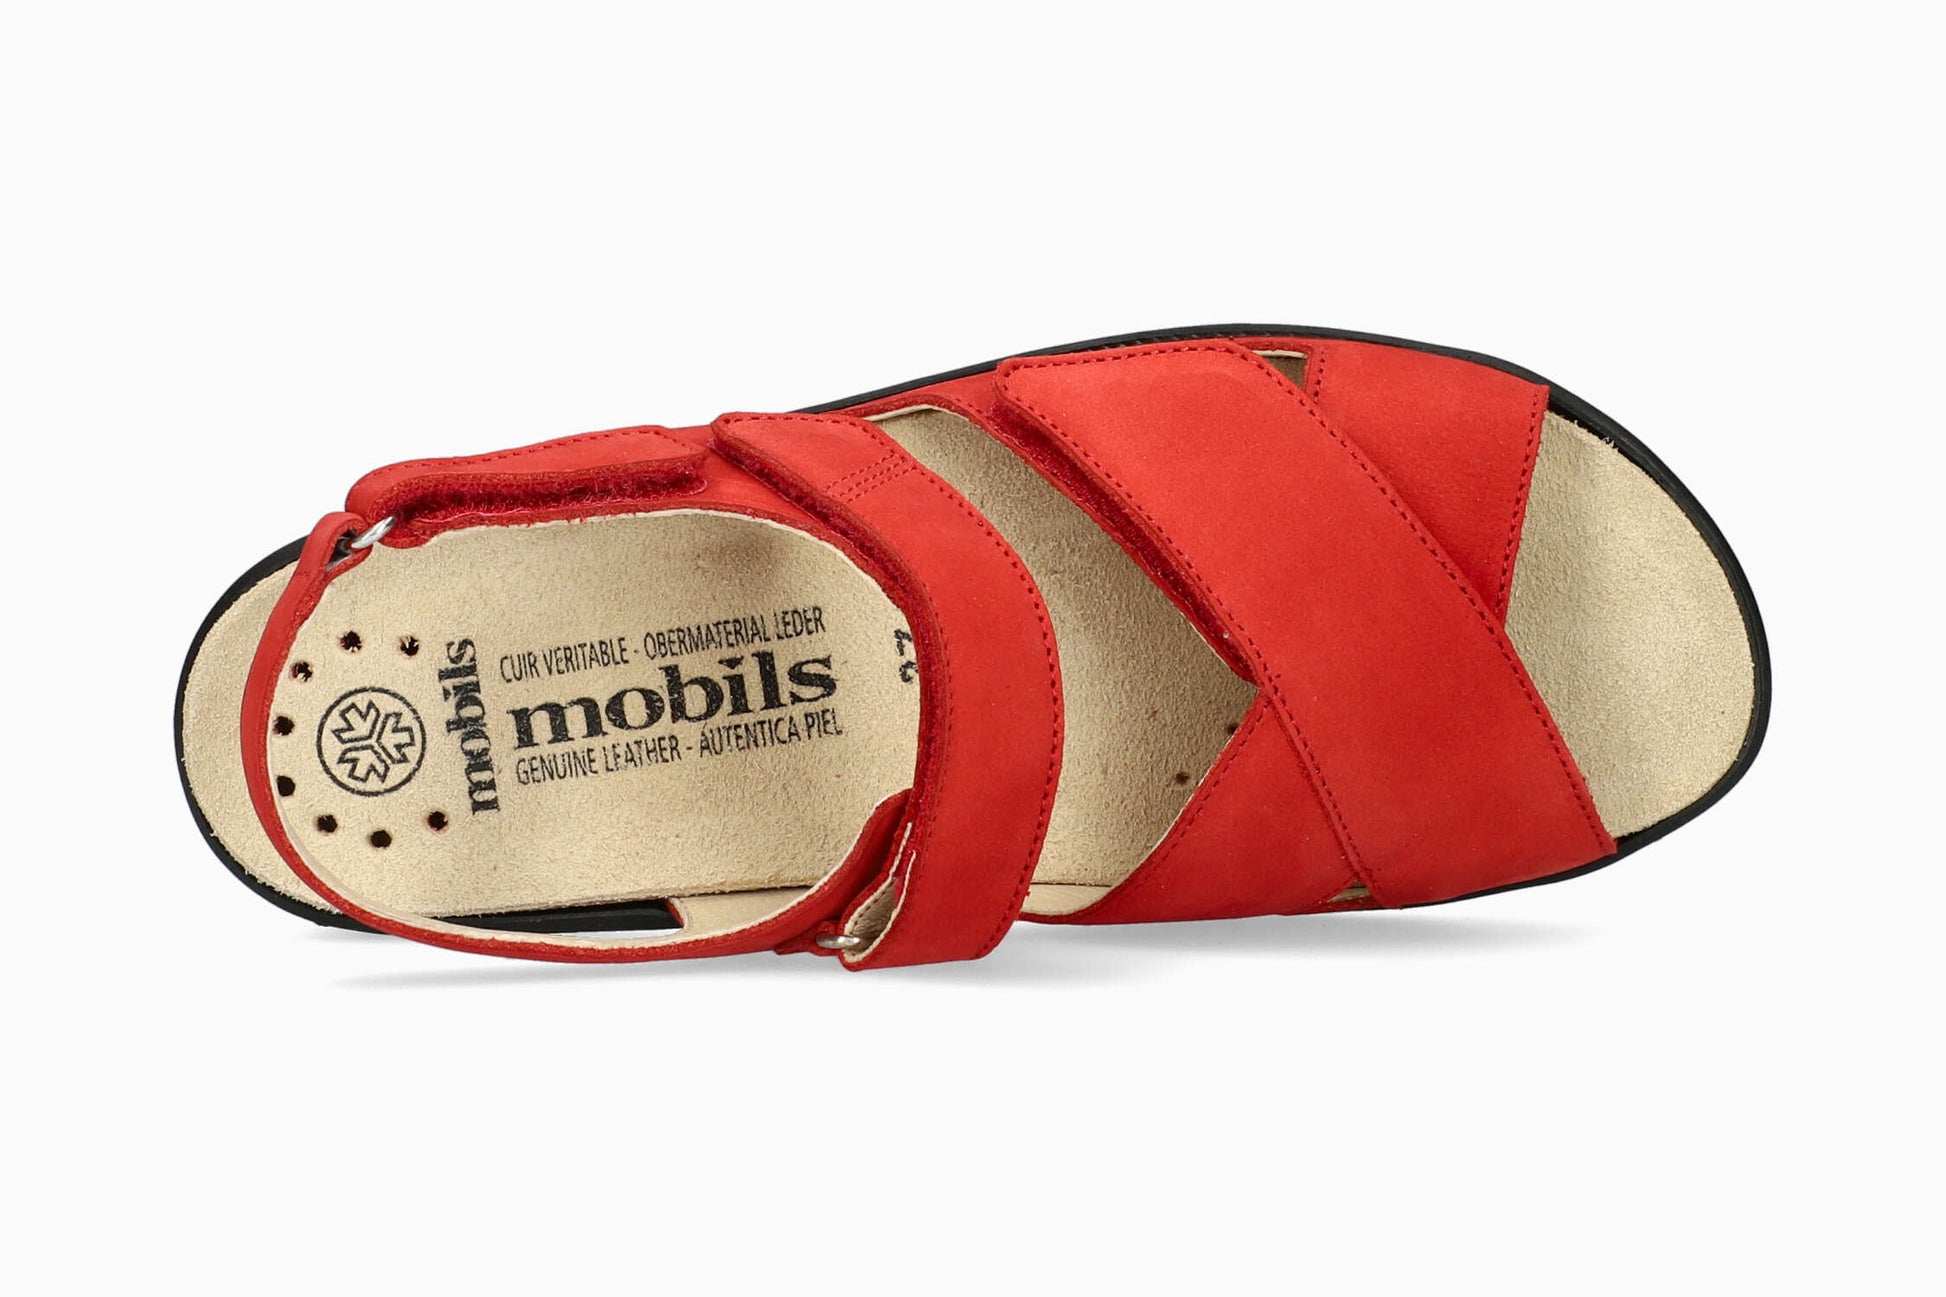 Mobils Geryna Scarlet Women's Sandal Top